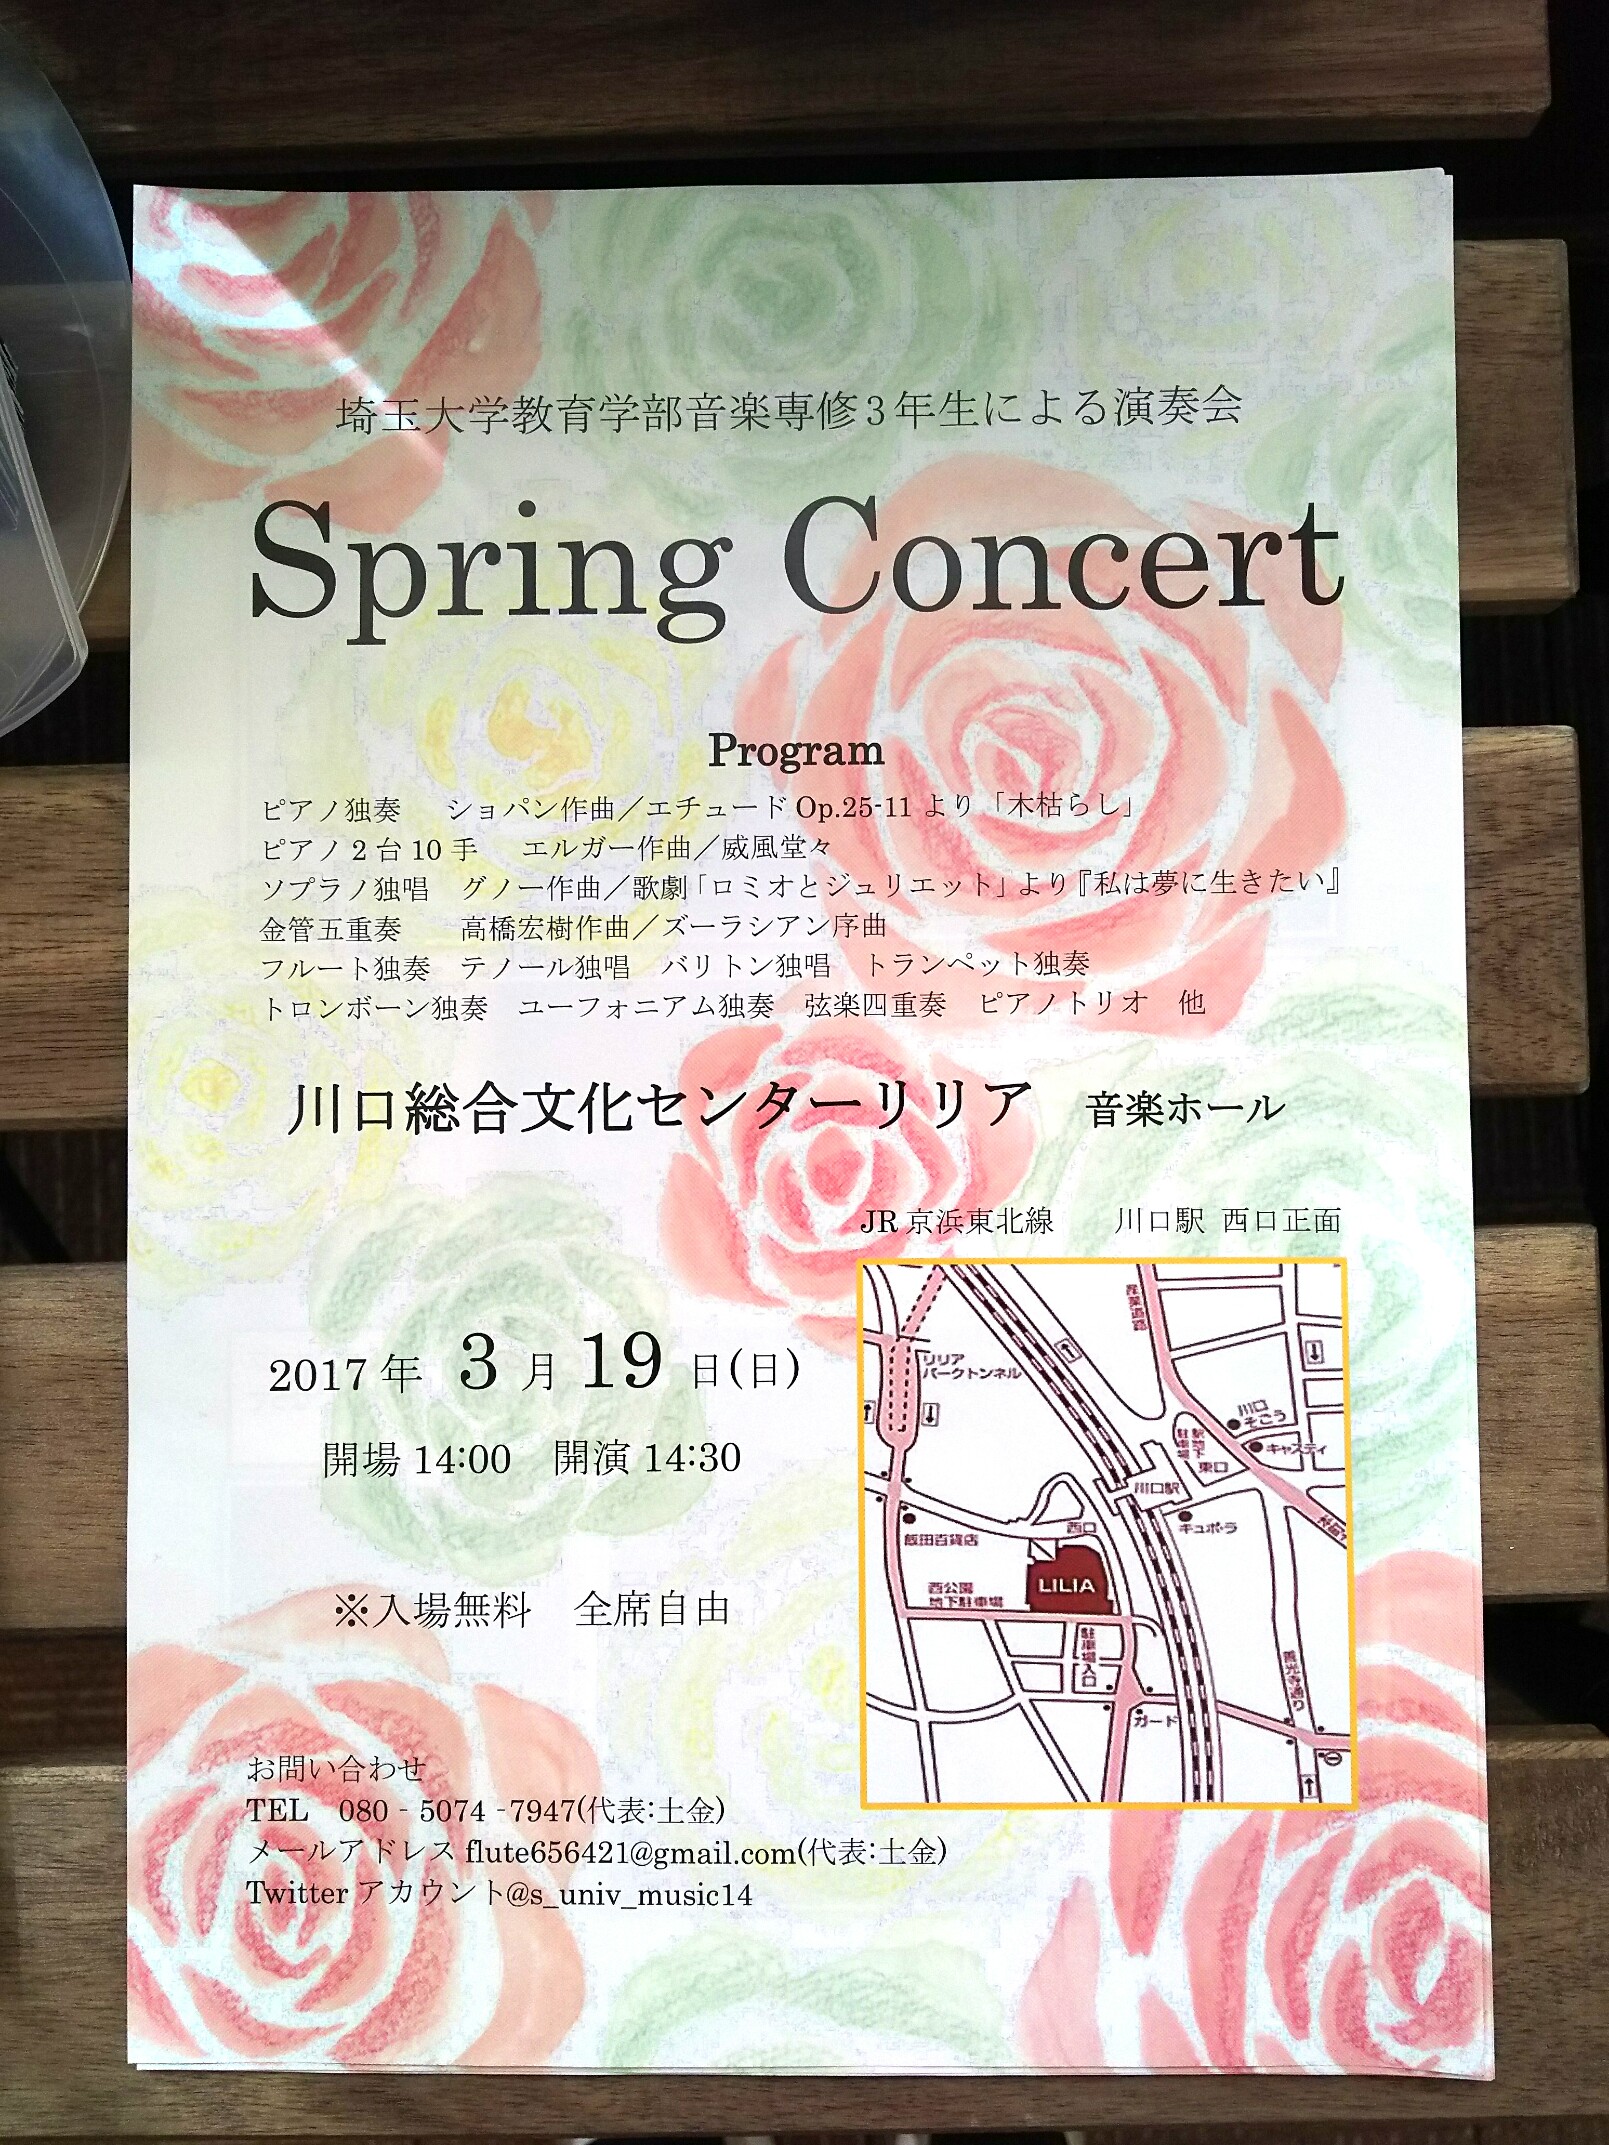 2017.3.11 update 埼玉大学教育学部音楽専修３年生演奏会のお知らせをいただきました。